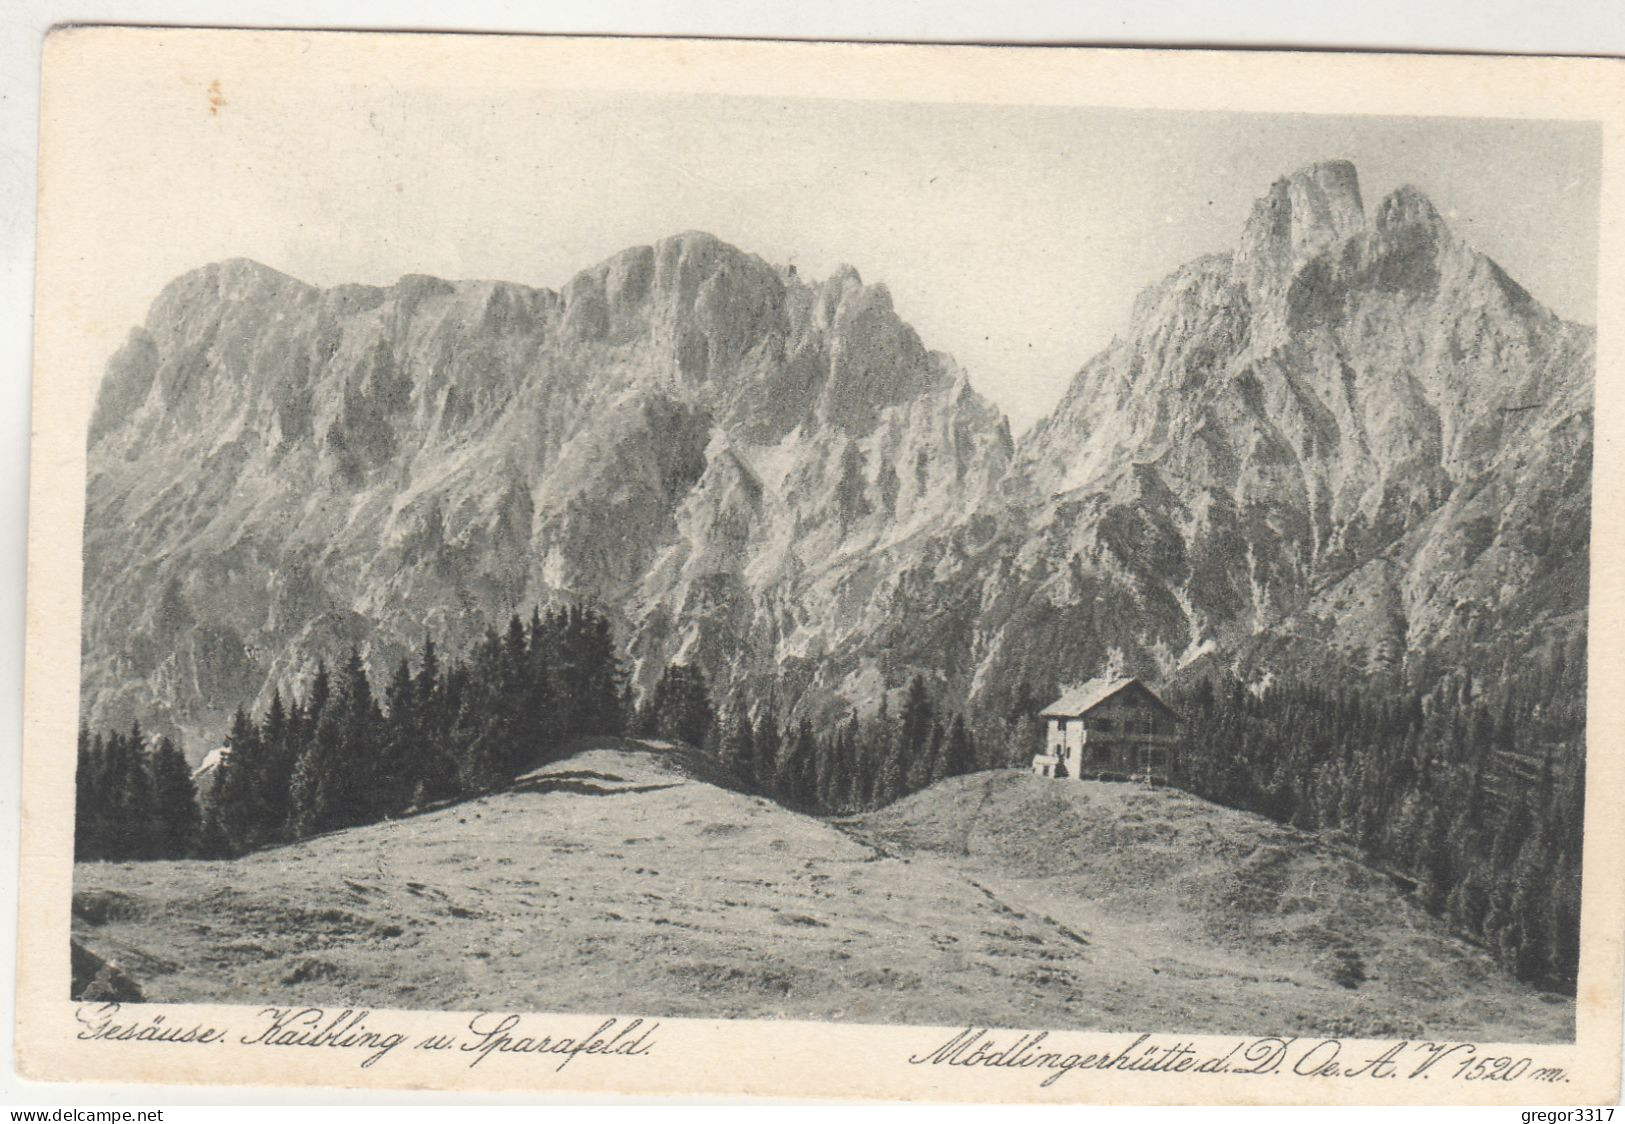 E4699) GESÄUE - Kaibling U. Sparafeld - Mödlingerhütte D. D.Ö. A.V. 1520m - 1922 - Gesäuse